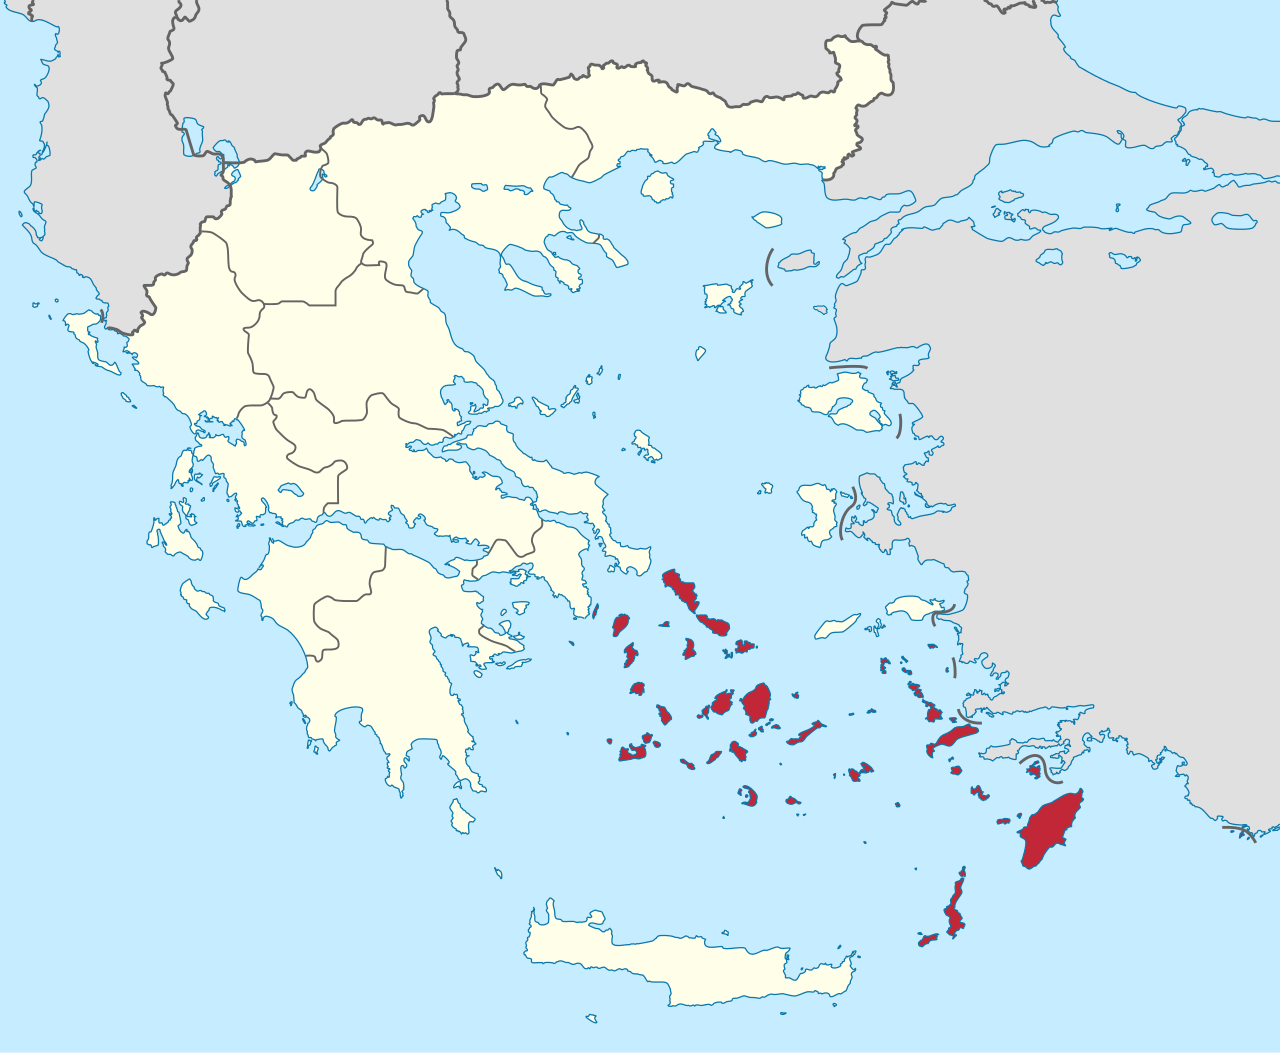 Market Urbex location or around the region South Aegean, Greece